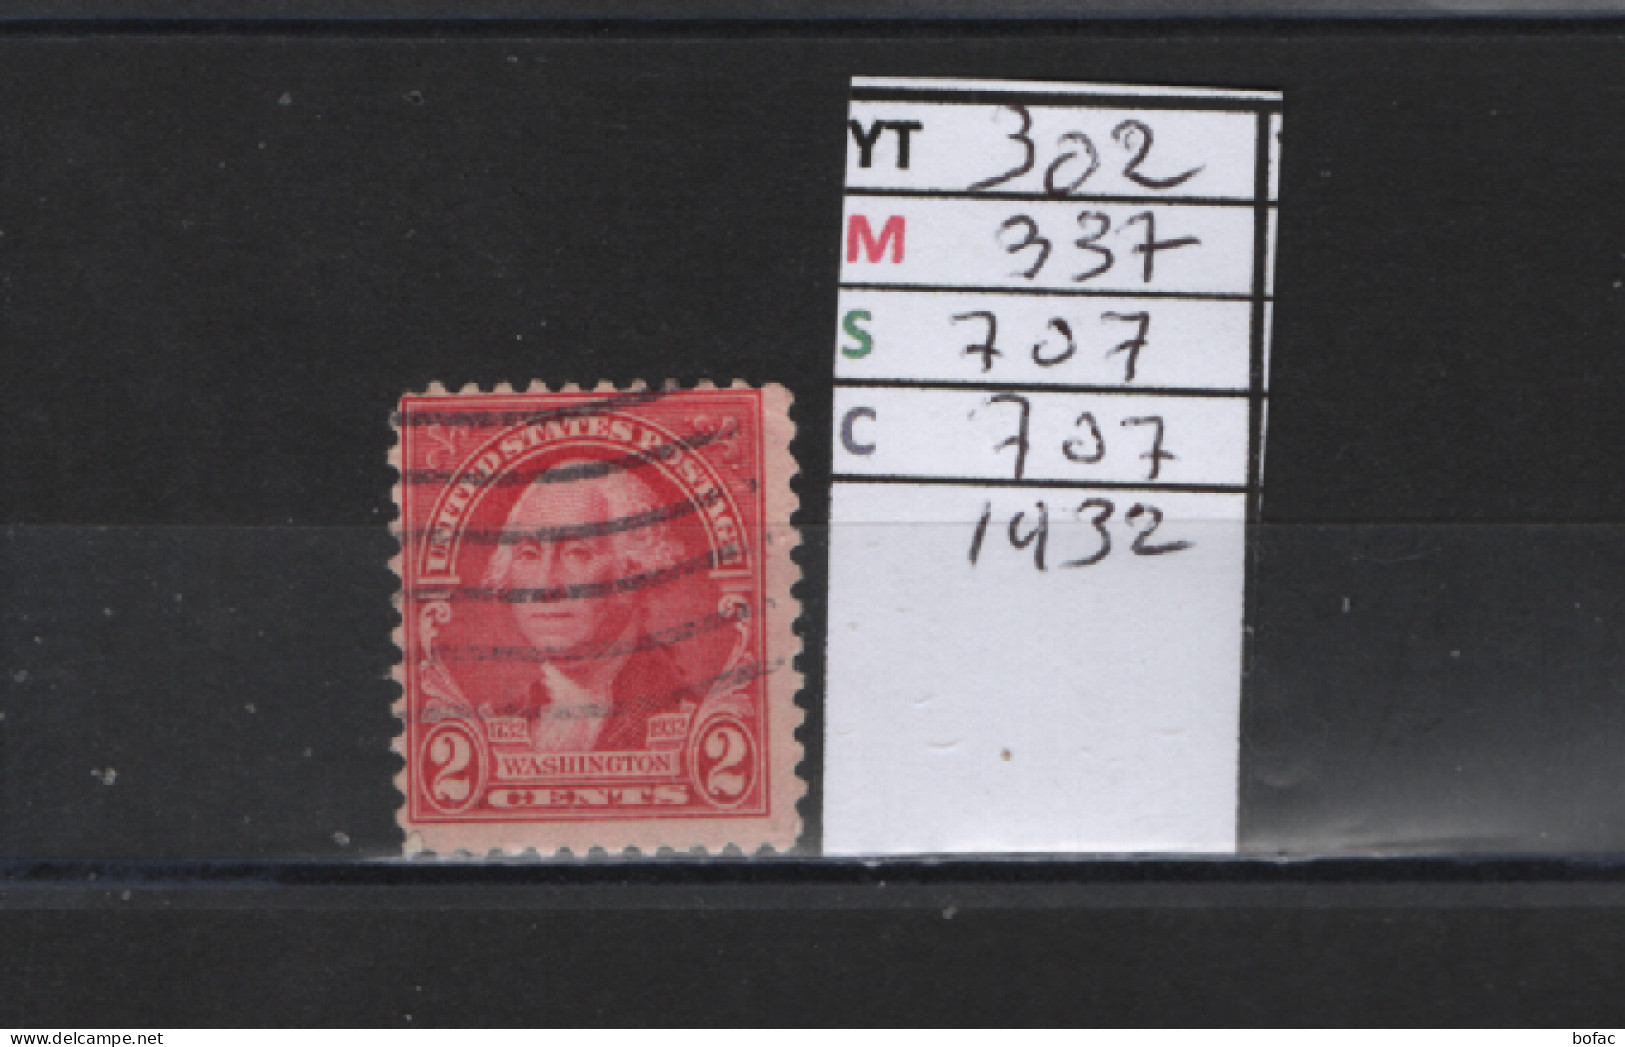 PRIX FIXE Obl 302  YT 337 MIC US707 SCO US707 GIB George Washington 1932 Etats Unis 58A/01 - Used Stamps